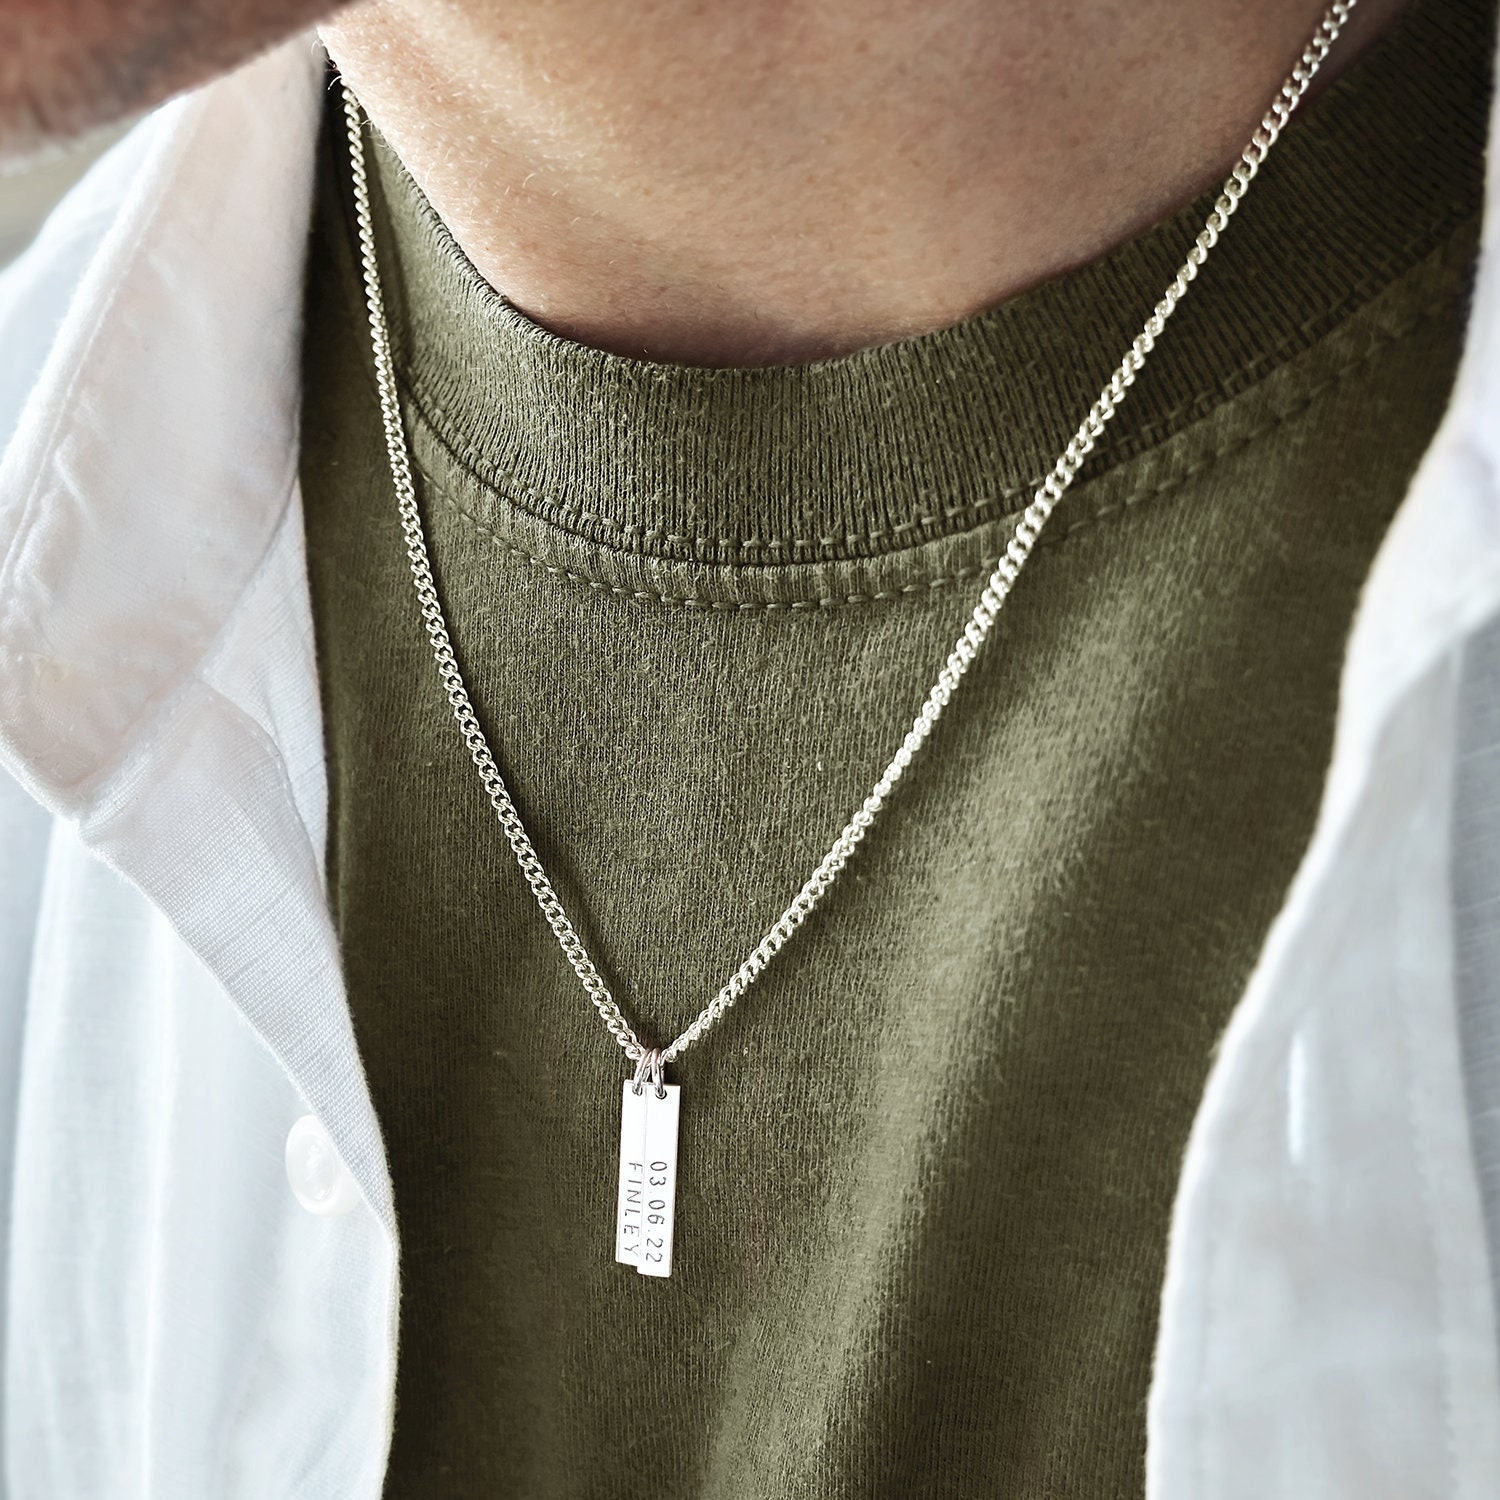 Christus Dog Tag Necklace - Silver